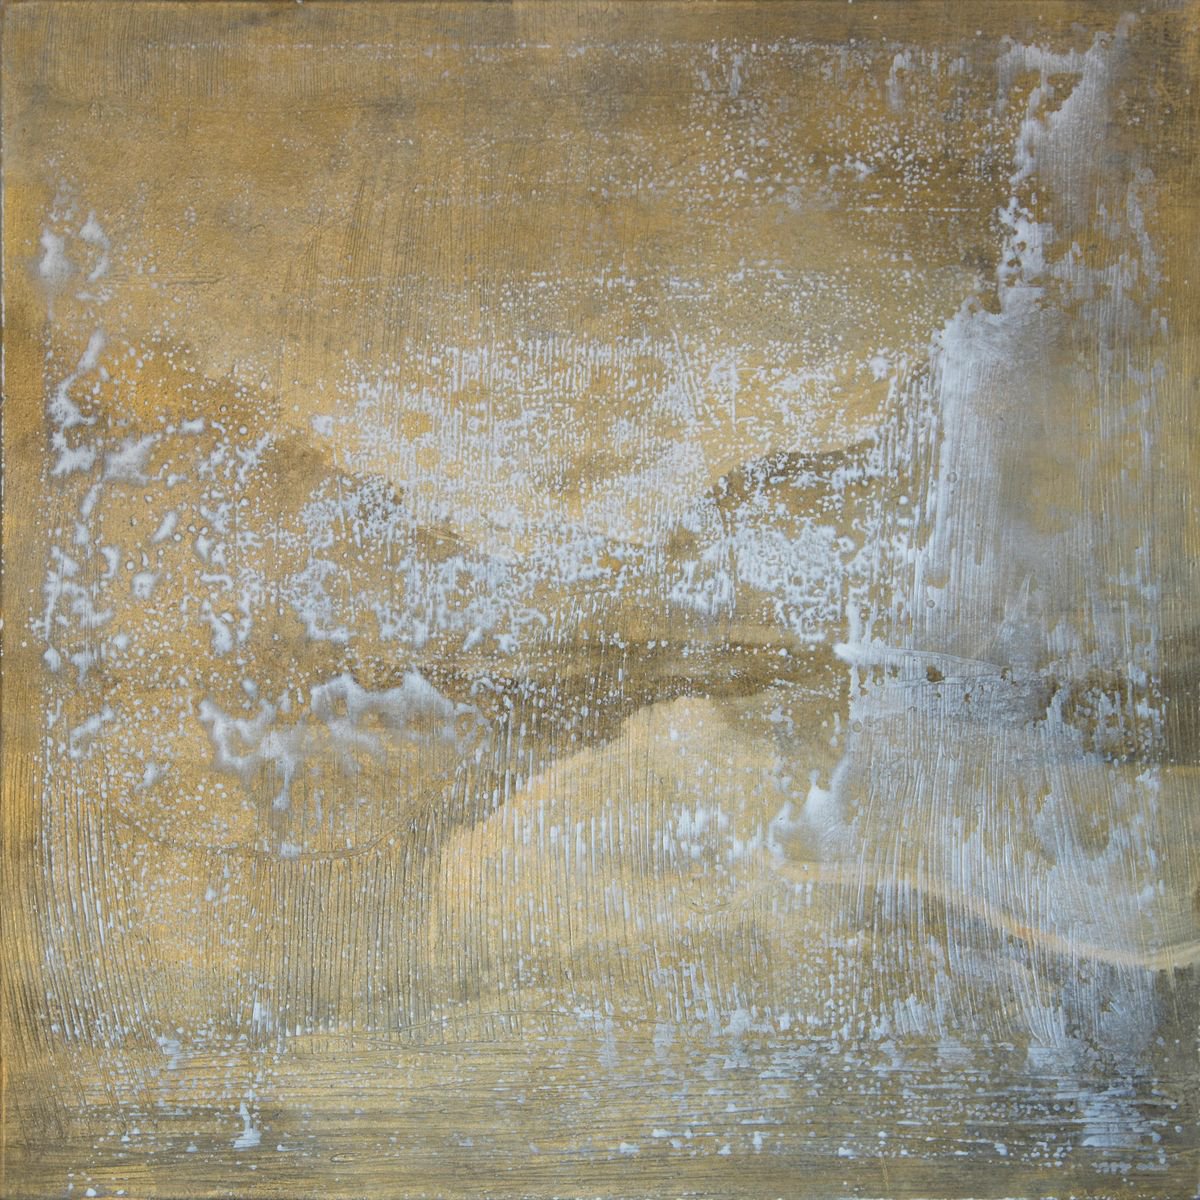 No. 378 (90 x 90 cm) by Rokas Berziunas